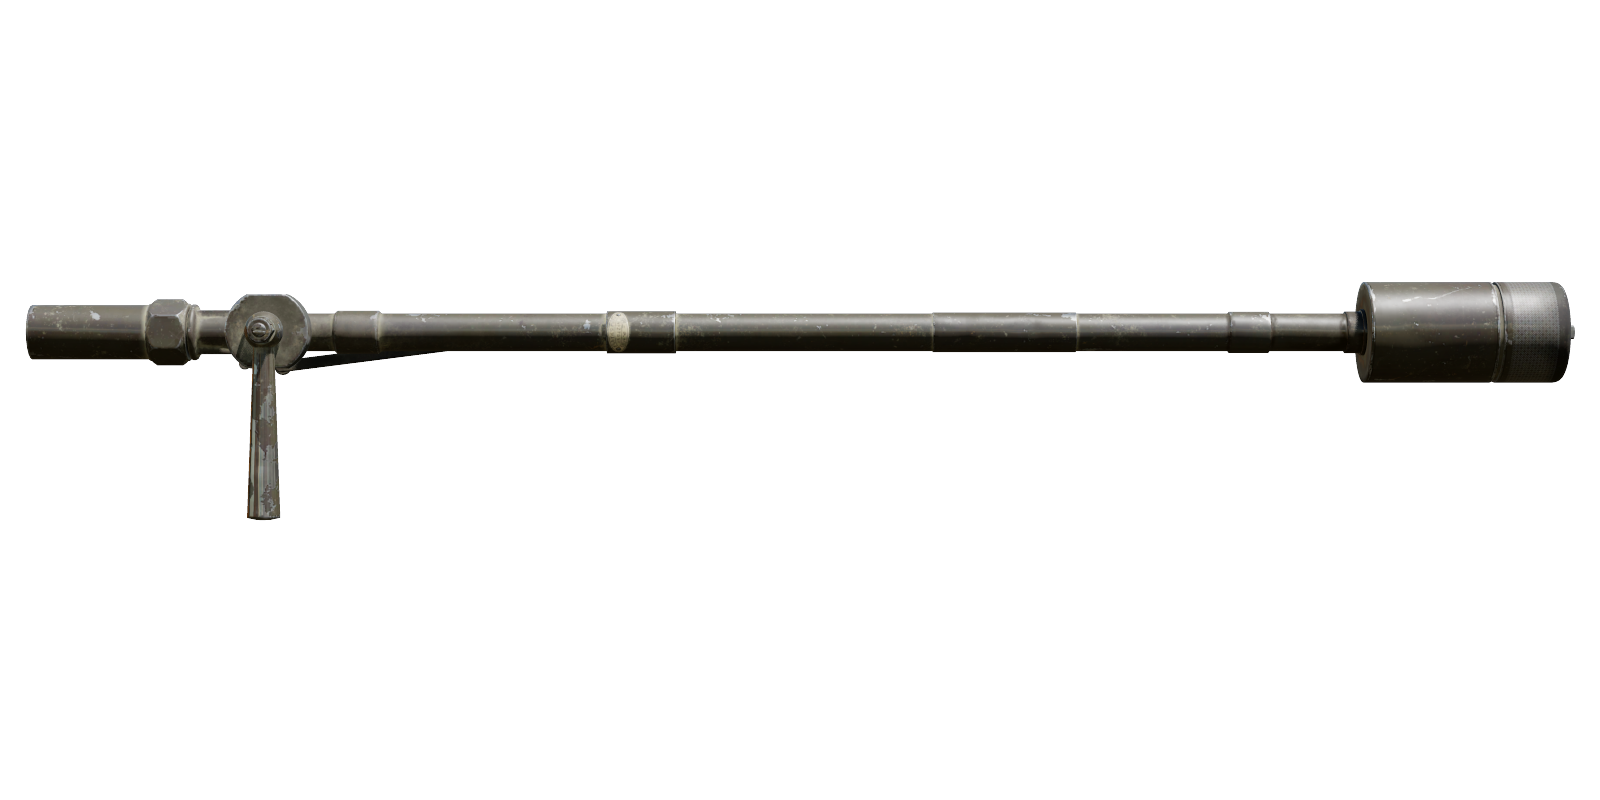 Type 100 flamethrower gun.png